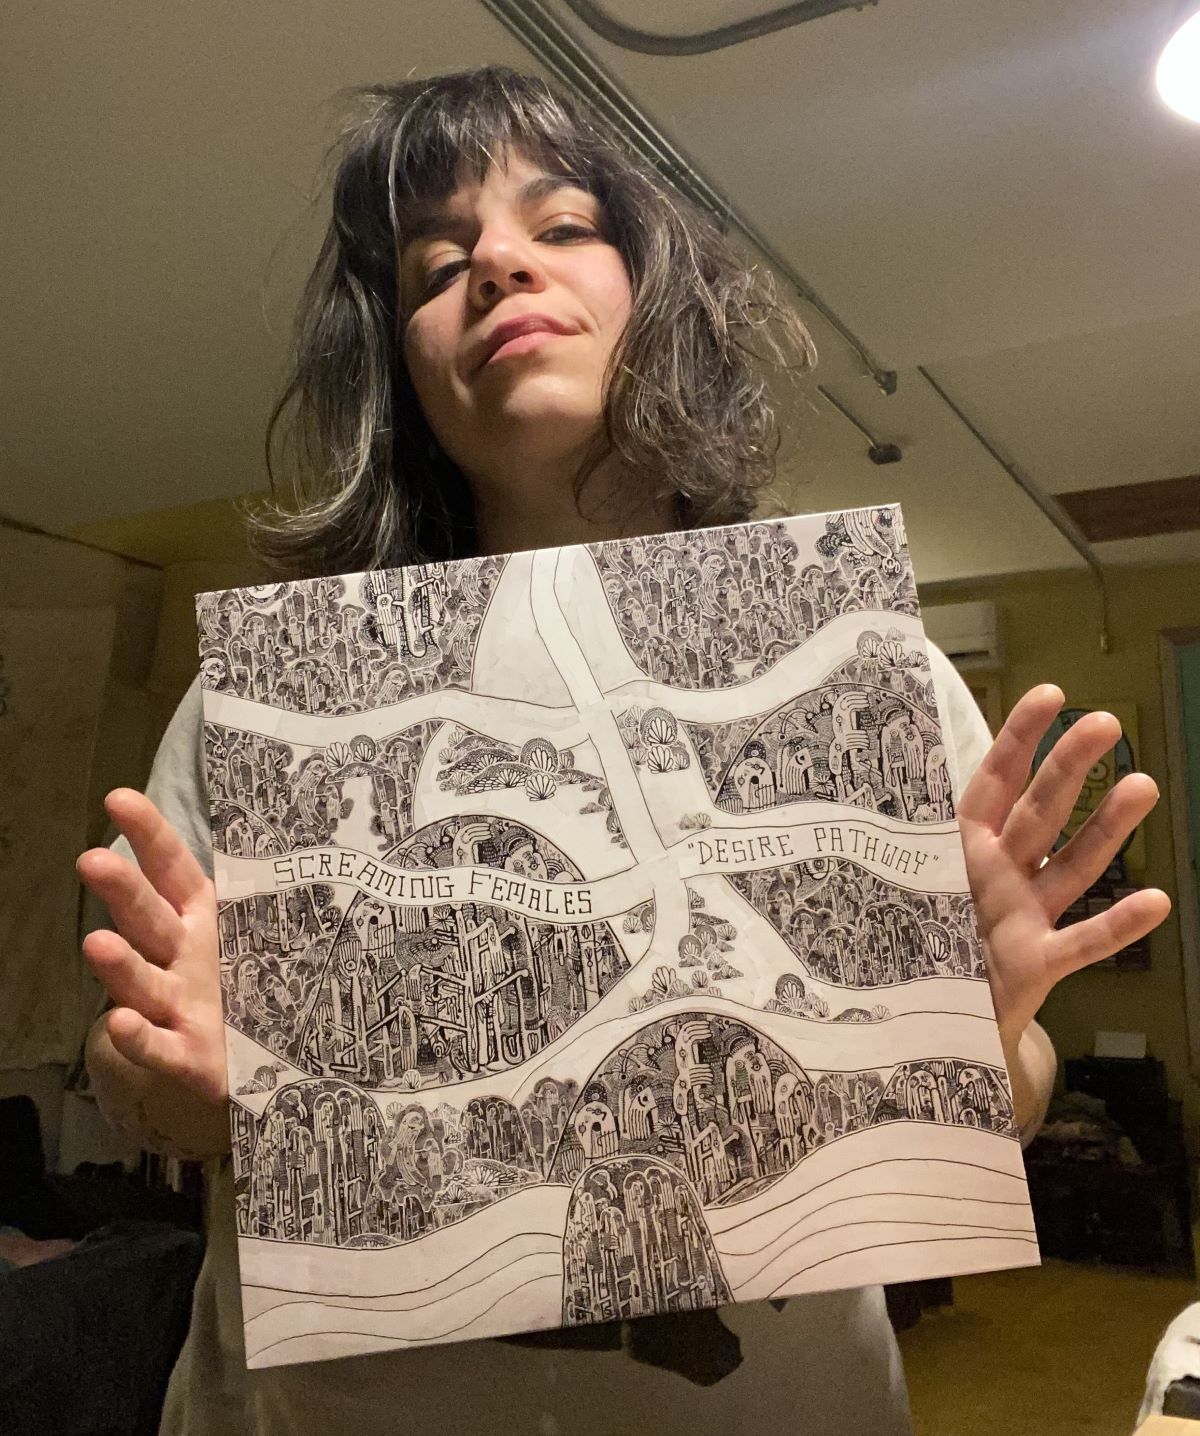 Marissa Paternoster holding a vinyl copy of Desire Pathway